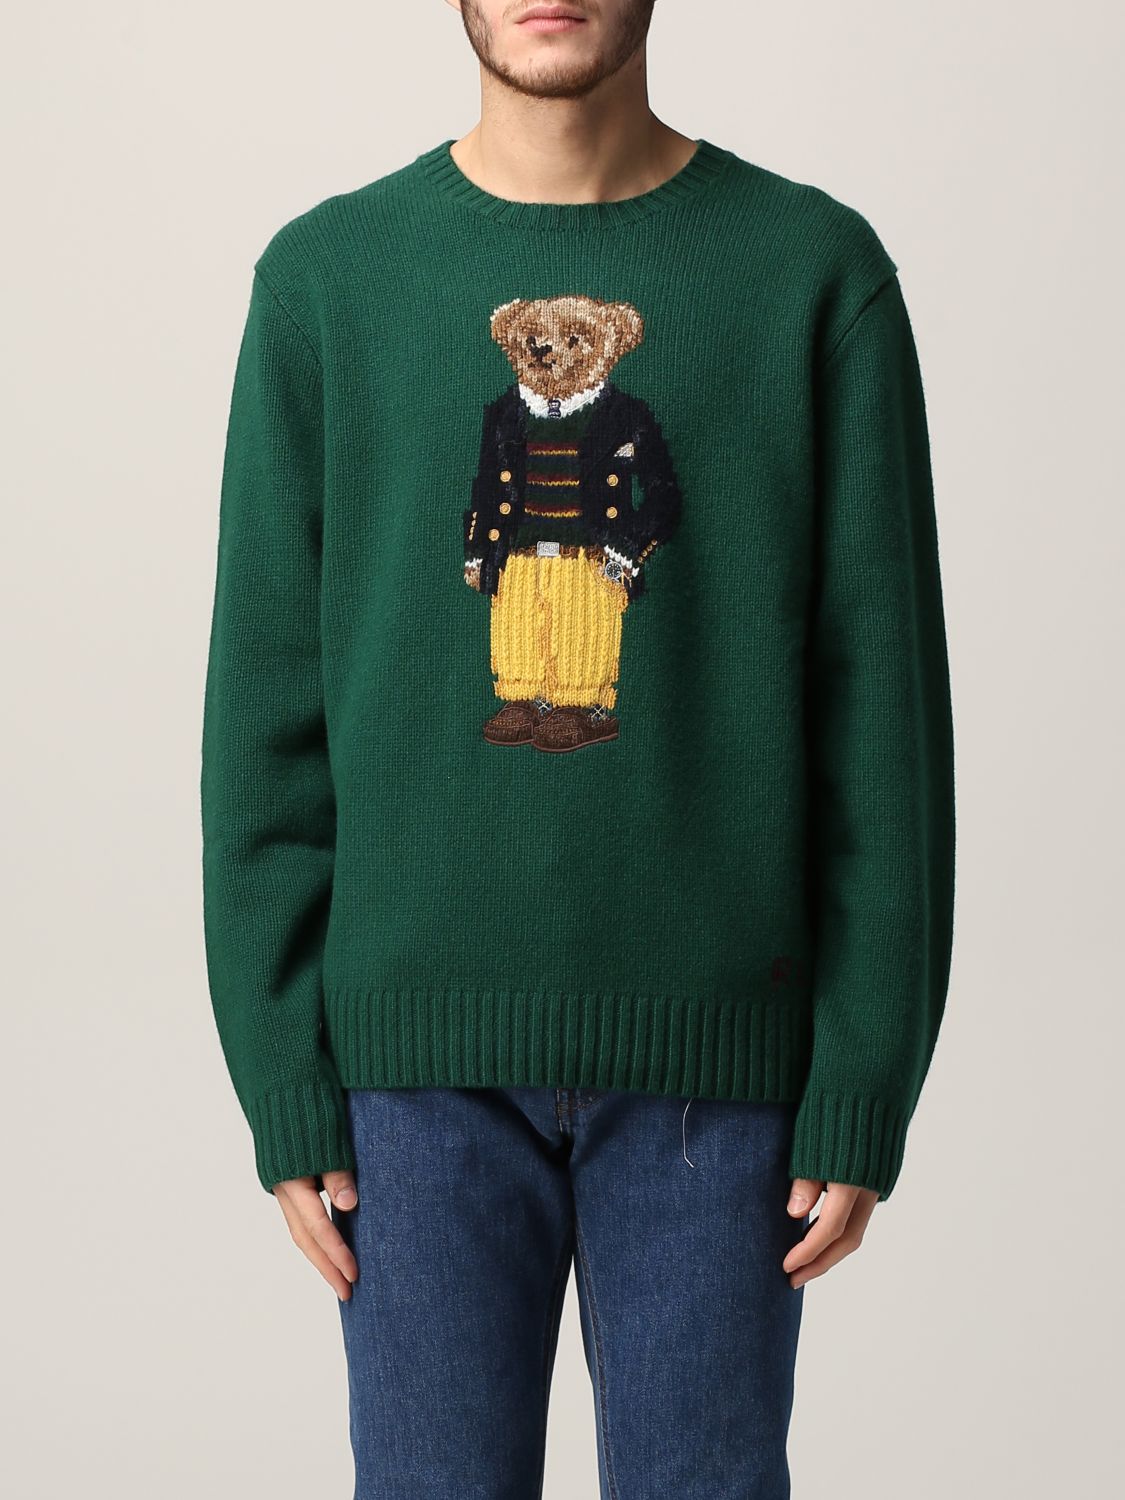 POLO RALPH LAUREN: sweater with teddy bear - Forest Green | Polo Ralph  Lauren sweater 710850566 online on 